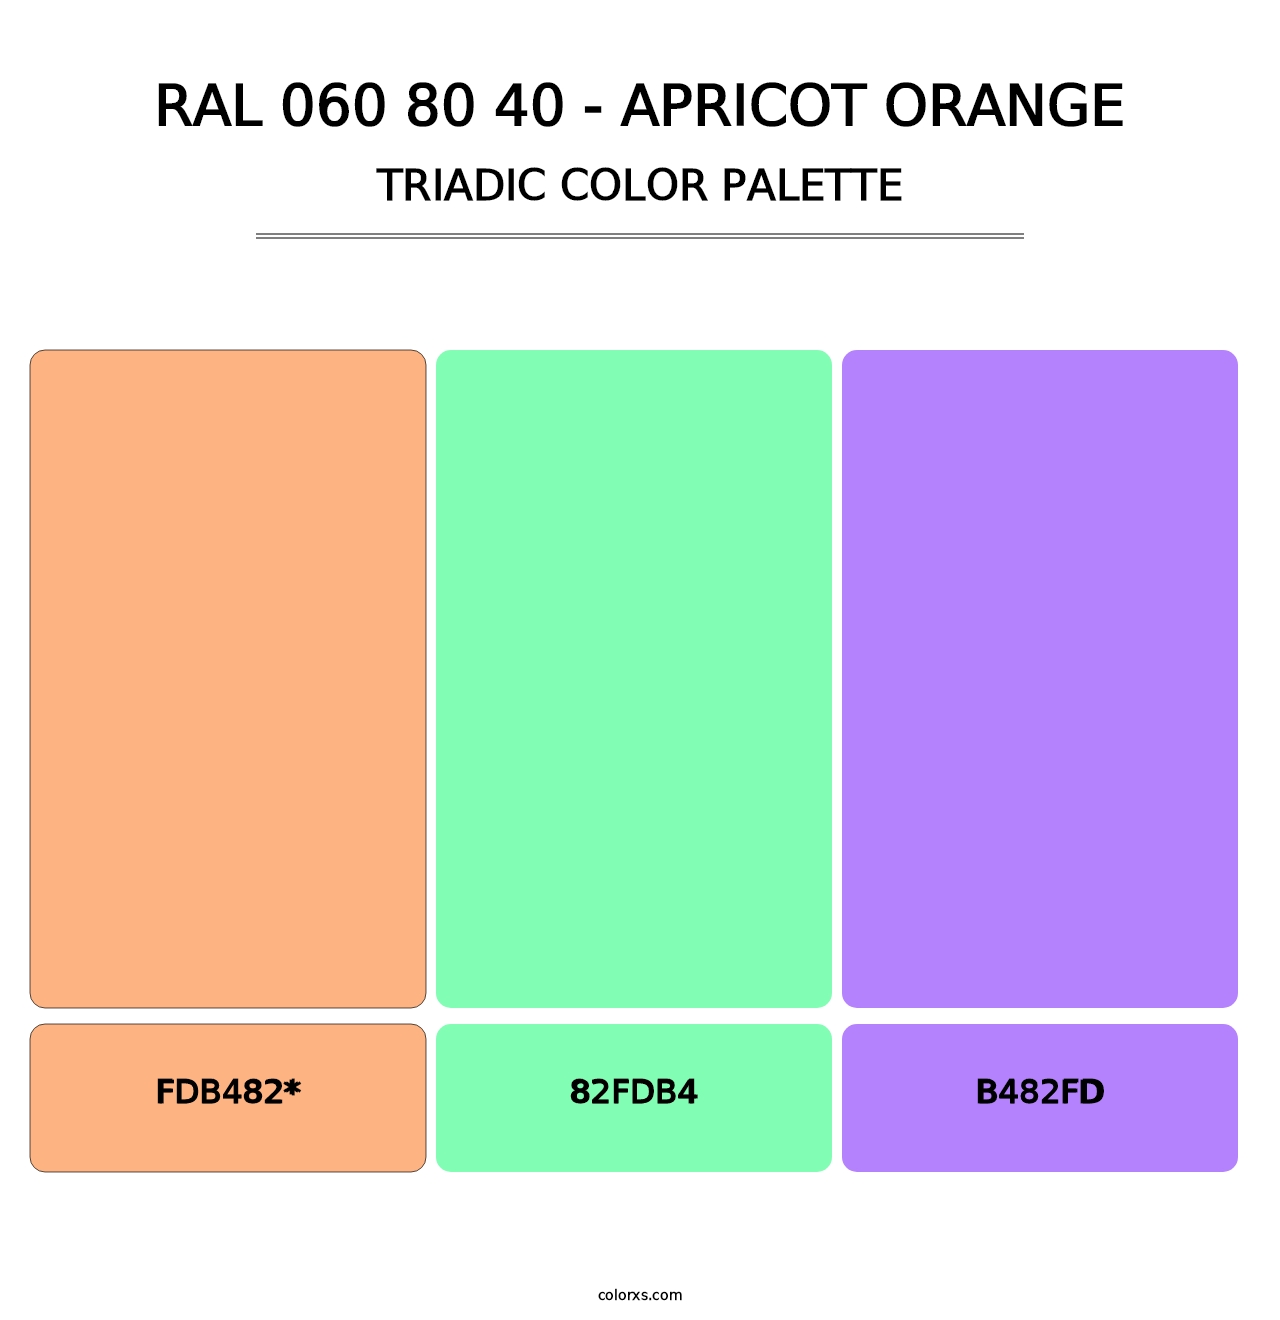 RAL 060 80 40 - Apricot Orange - Triadic Color Palette